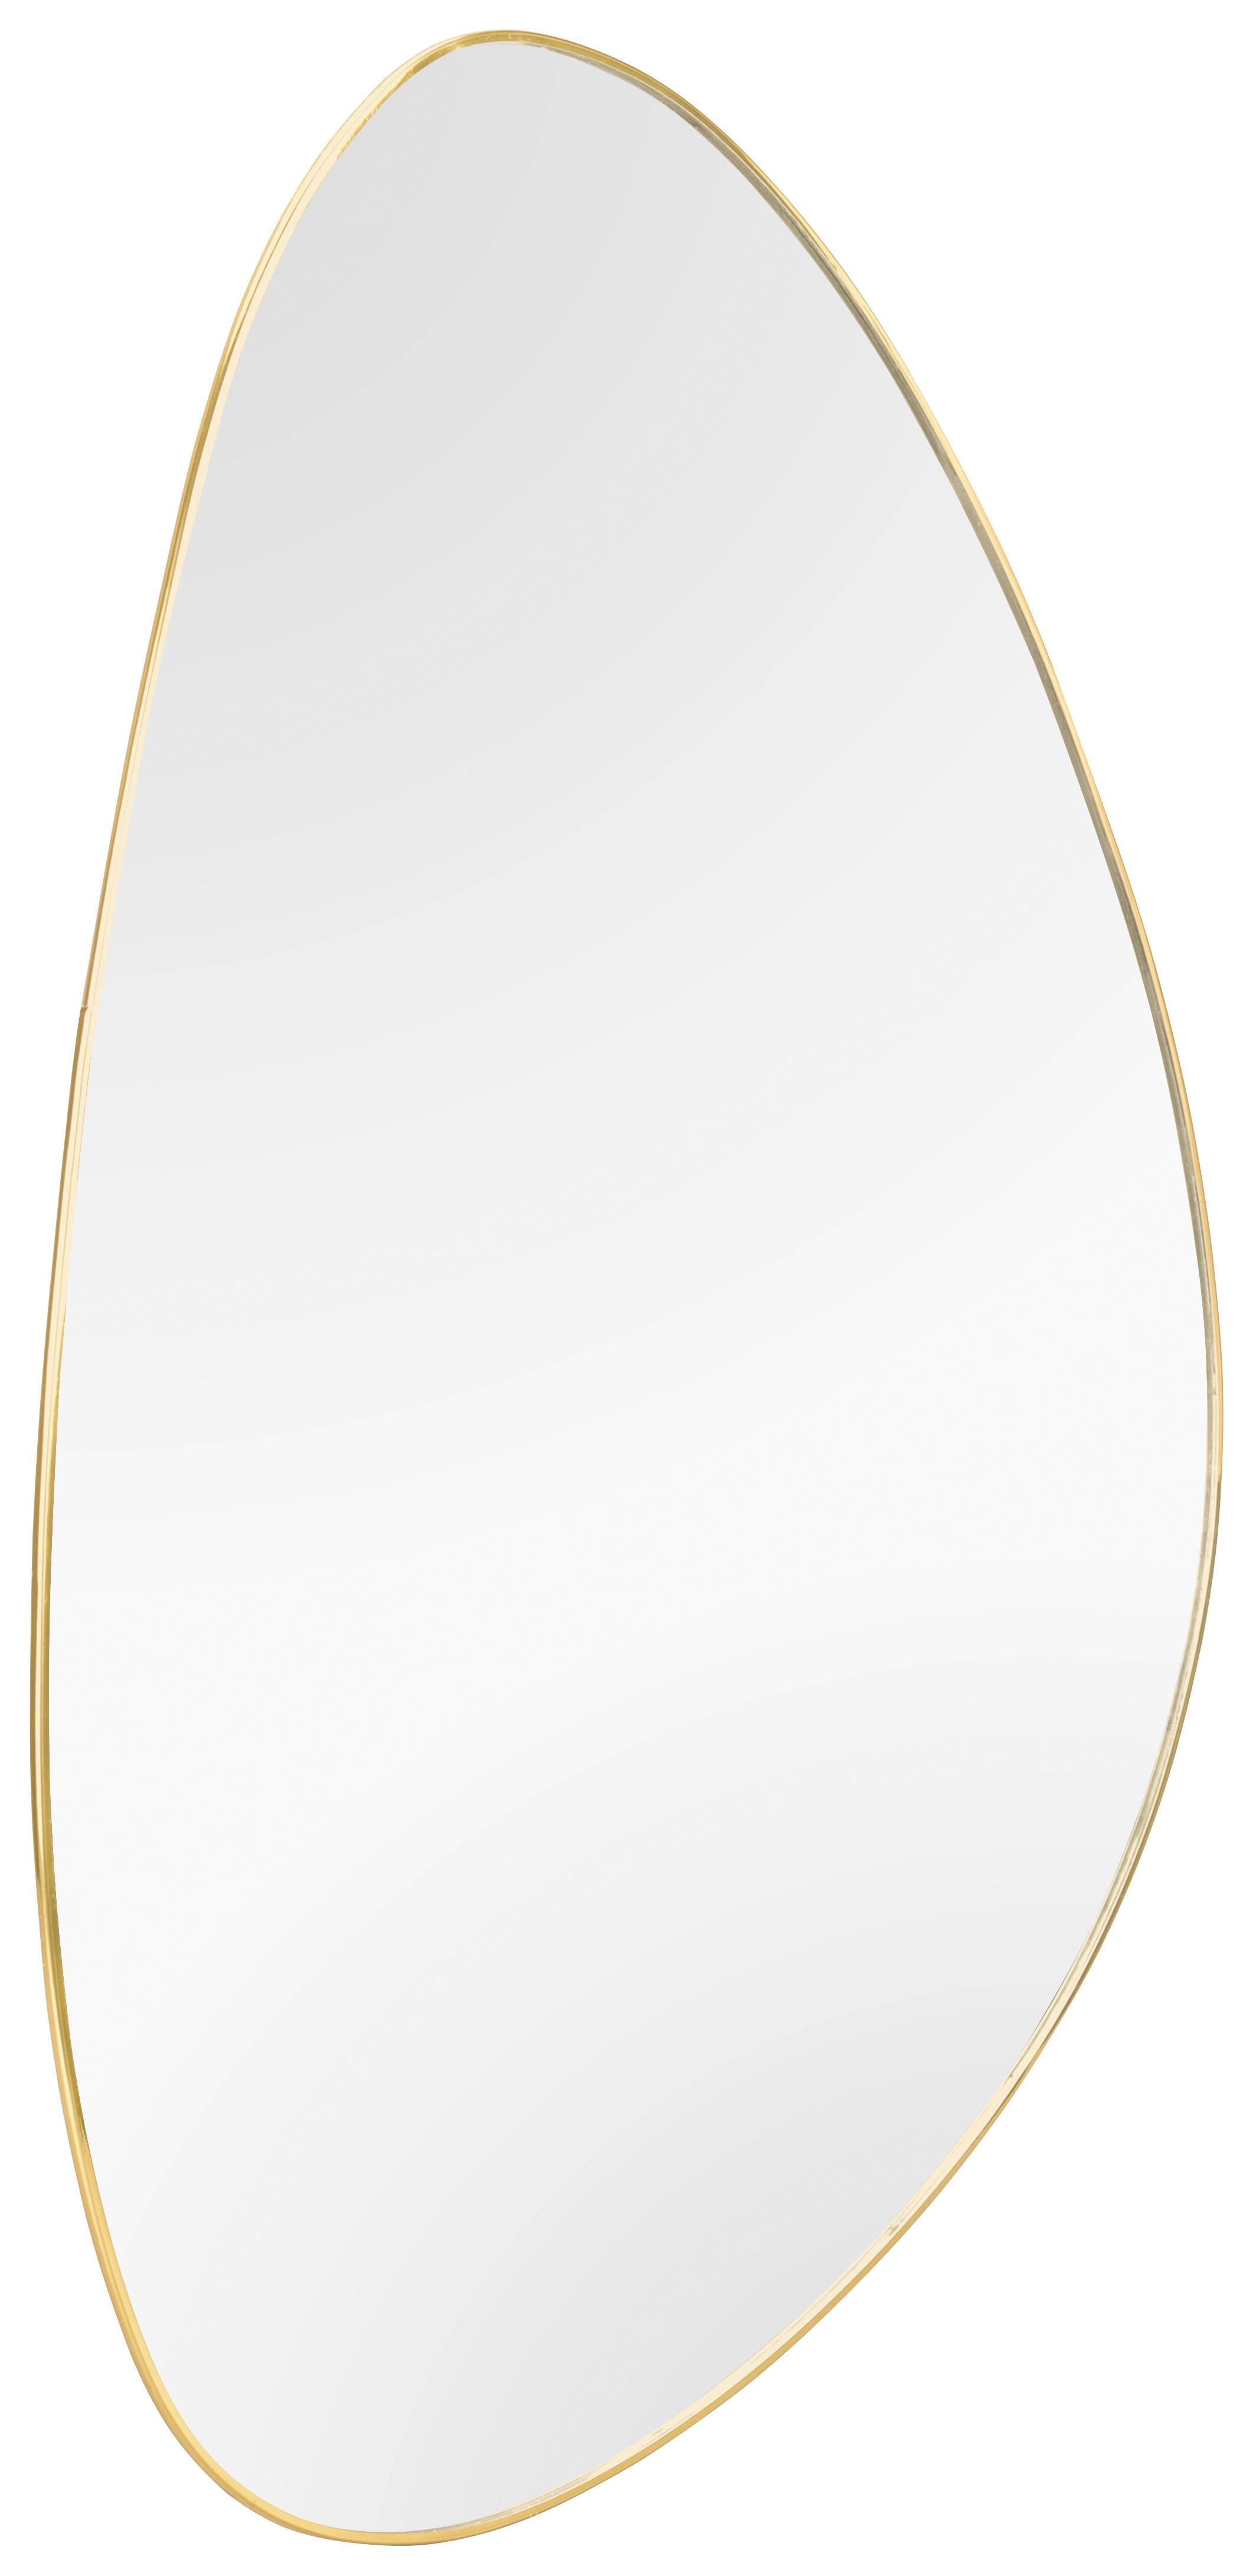 Nástěnné Zrcadlo Ida -Sb- - barvy zlata, Moderní, kov/sklo (40/60cm) - Modern Living